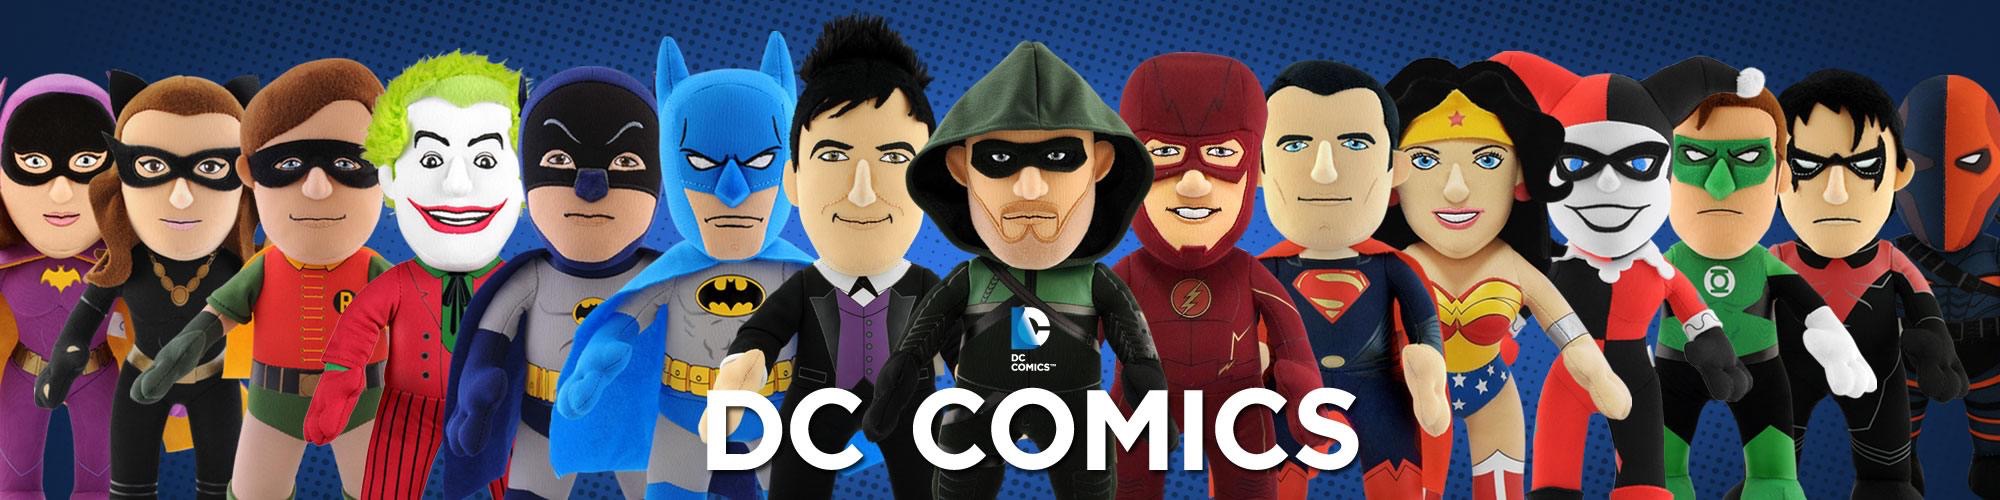 DC_Comics_Updated_Banner